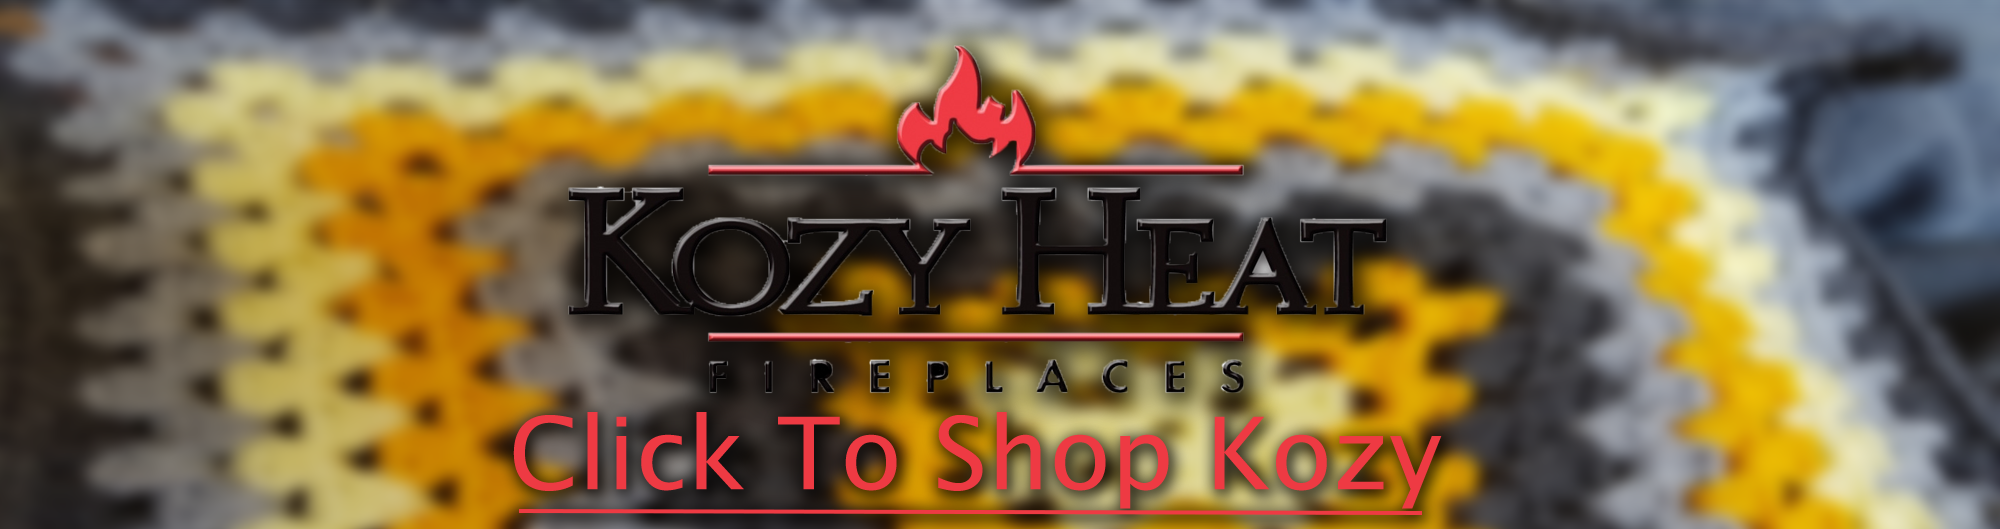 Kozy Gas Fireplace Banner